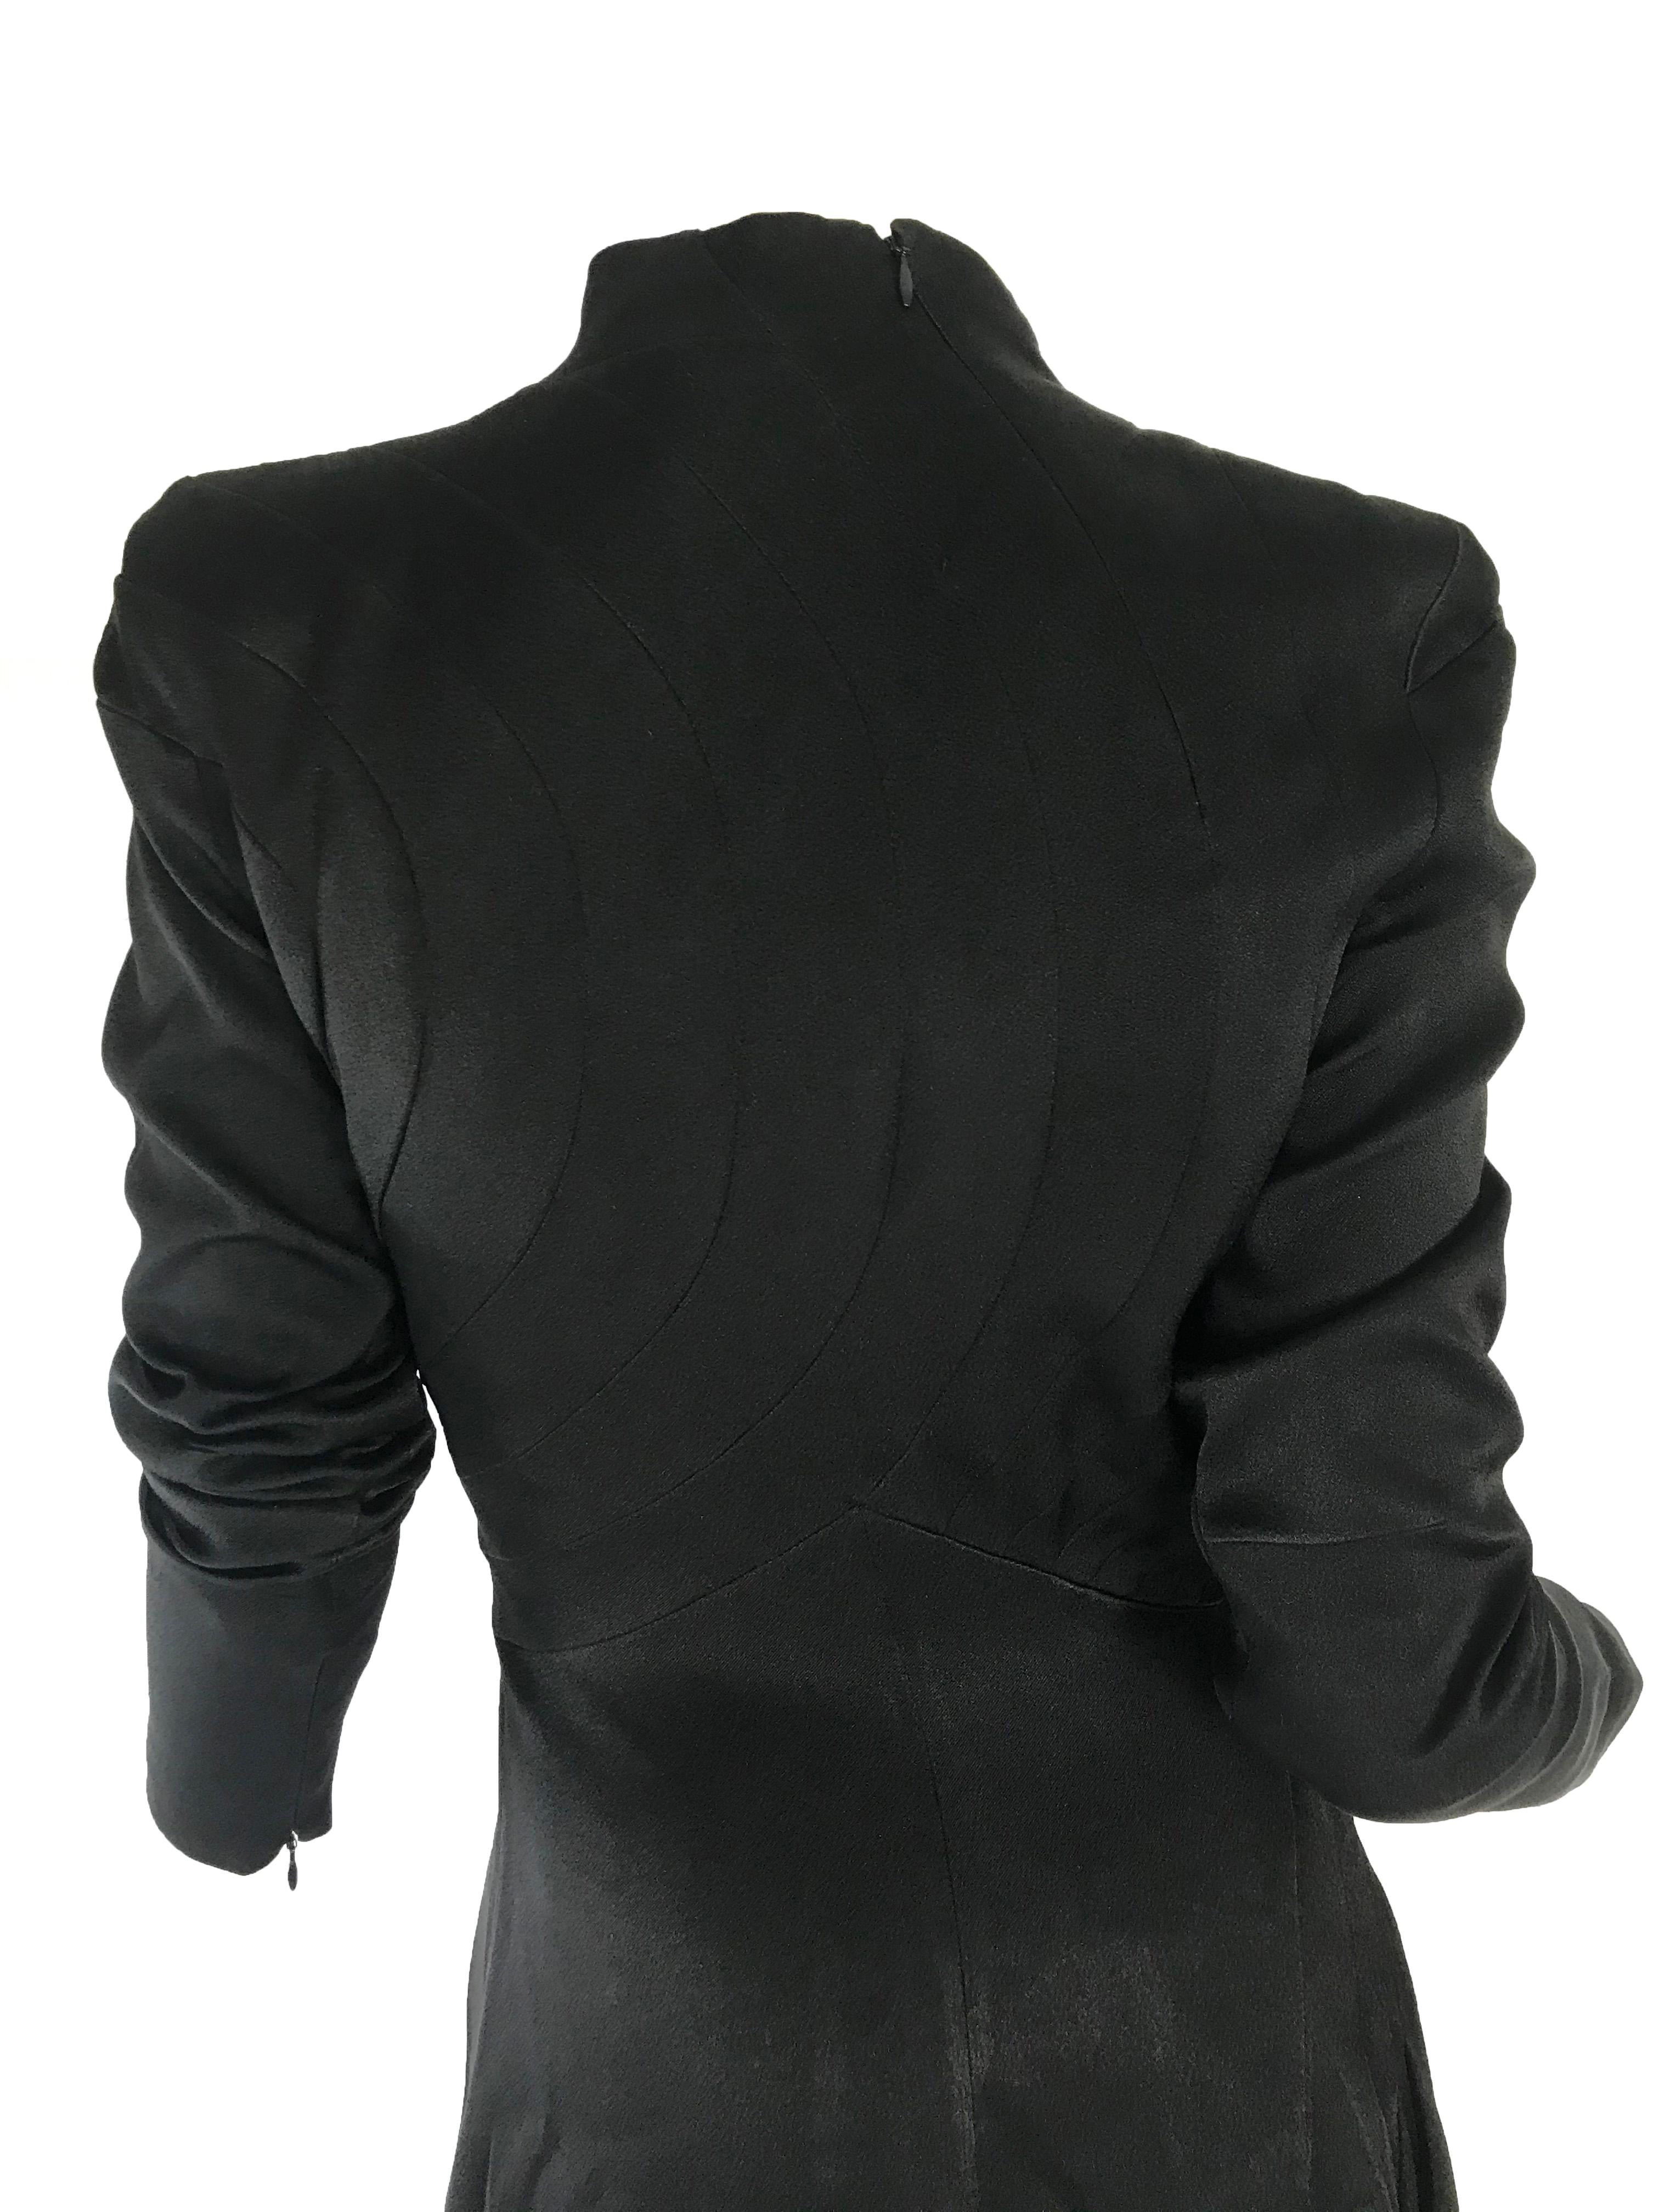 Women's 1990s black John Galliano dress with diagonal seams